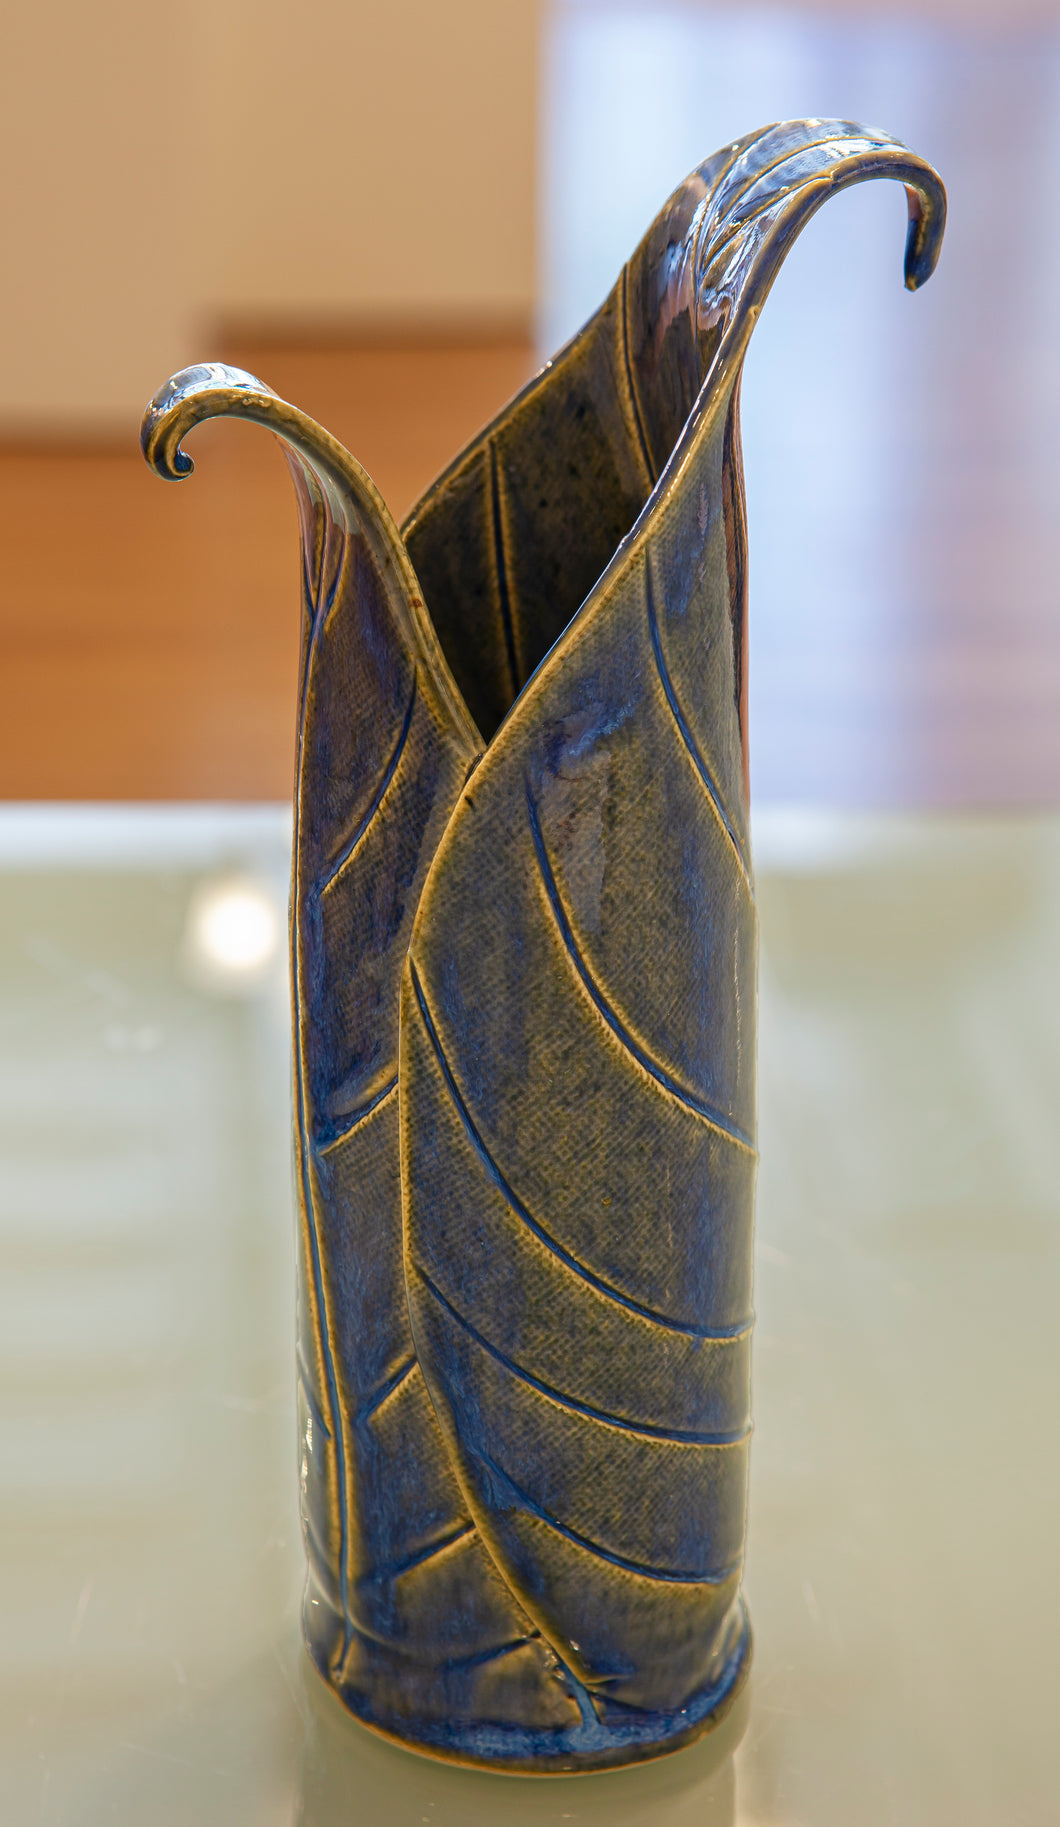 Leaf Vase by Gail Johnston